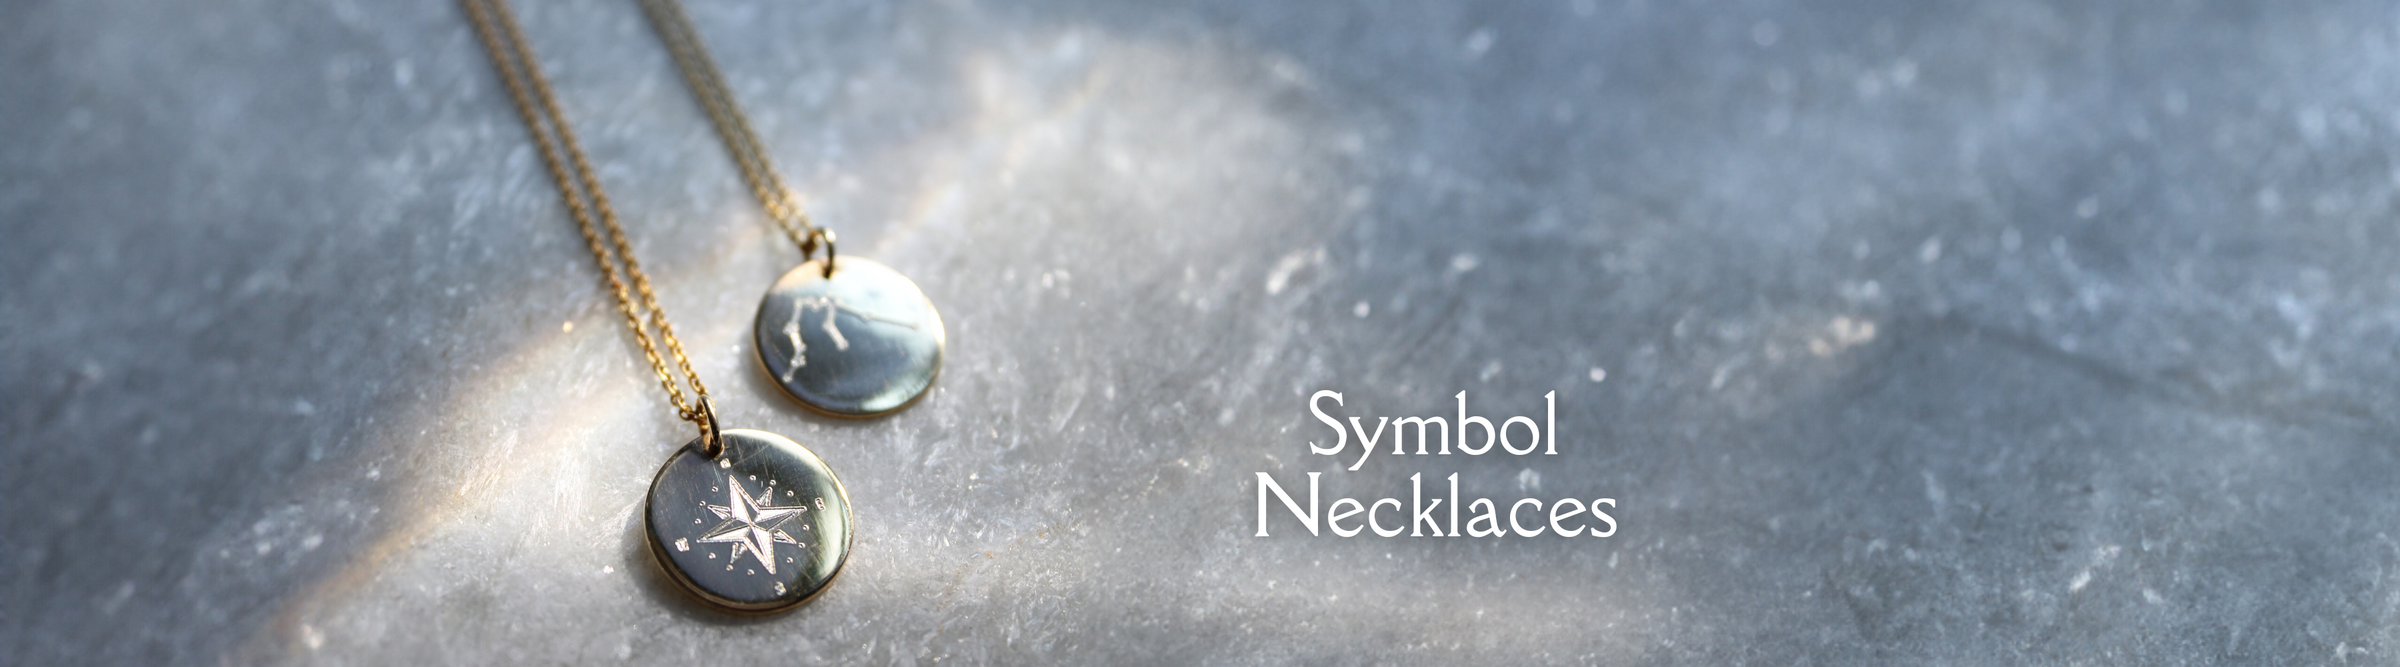 symbol necklaces banner image 